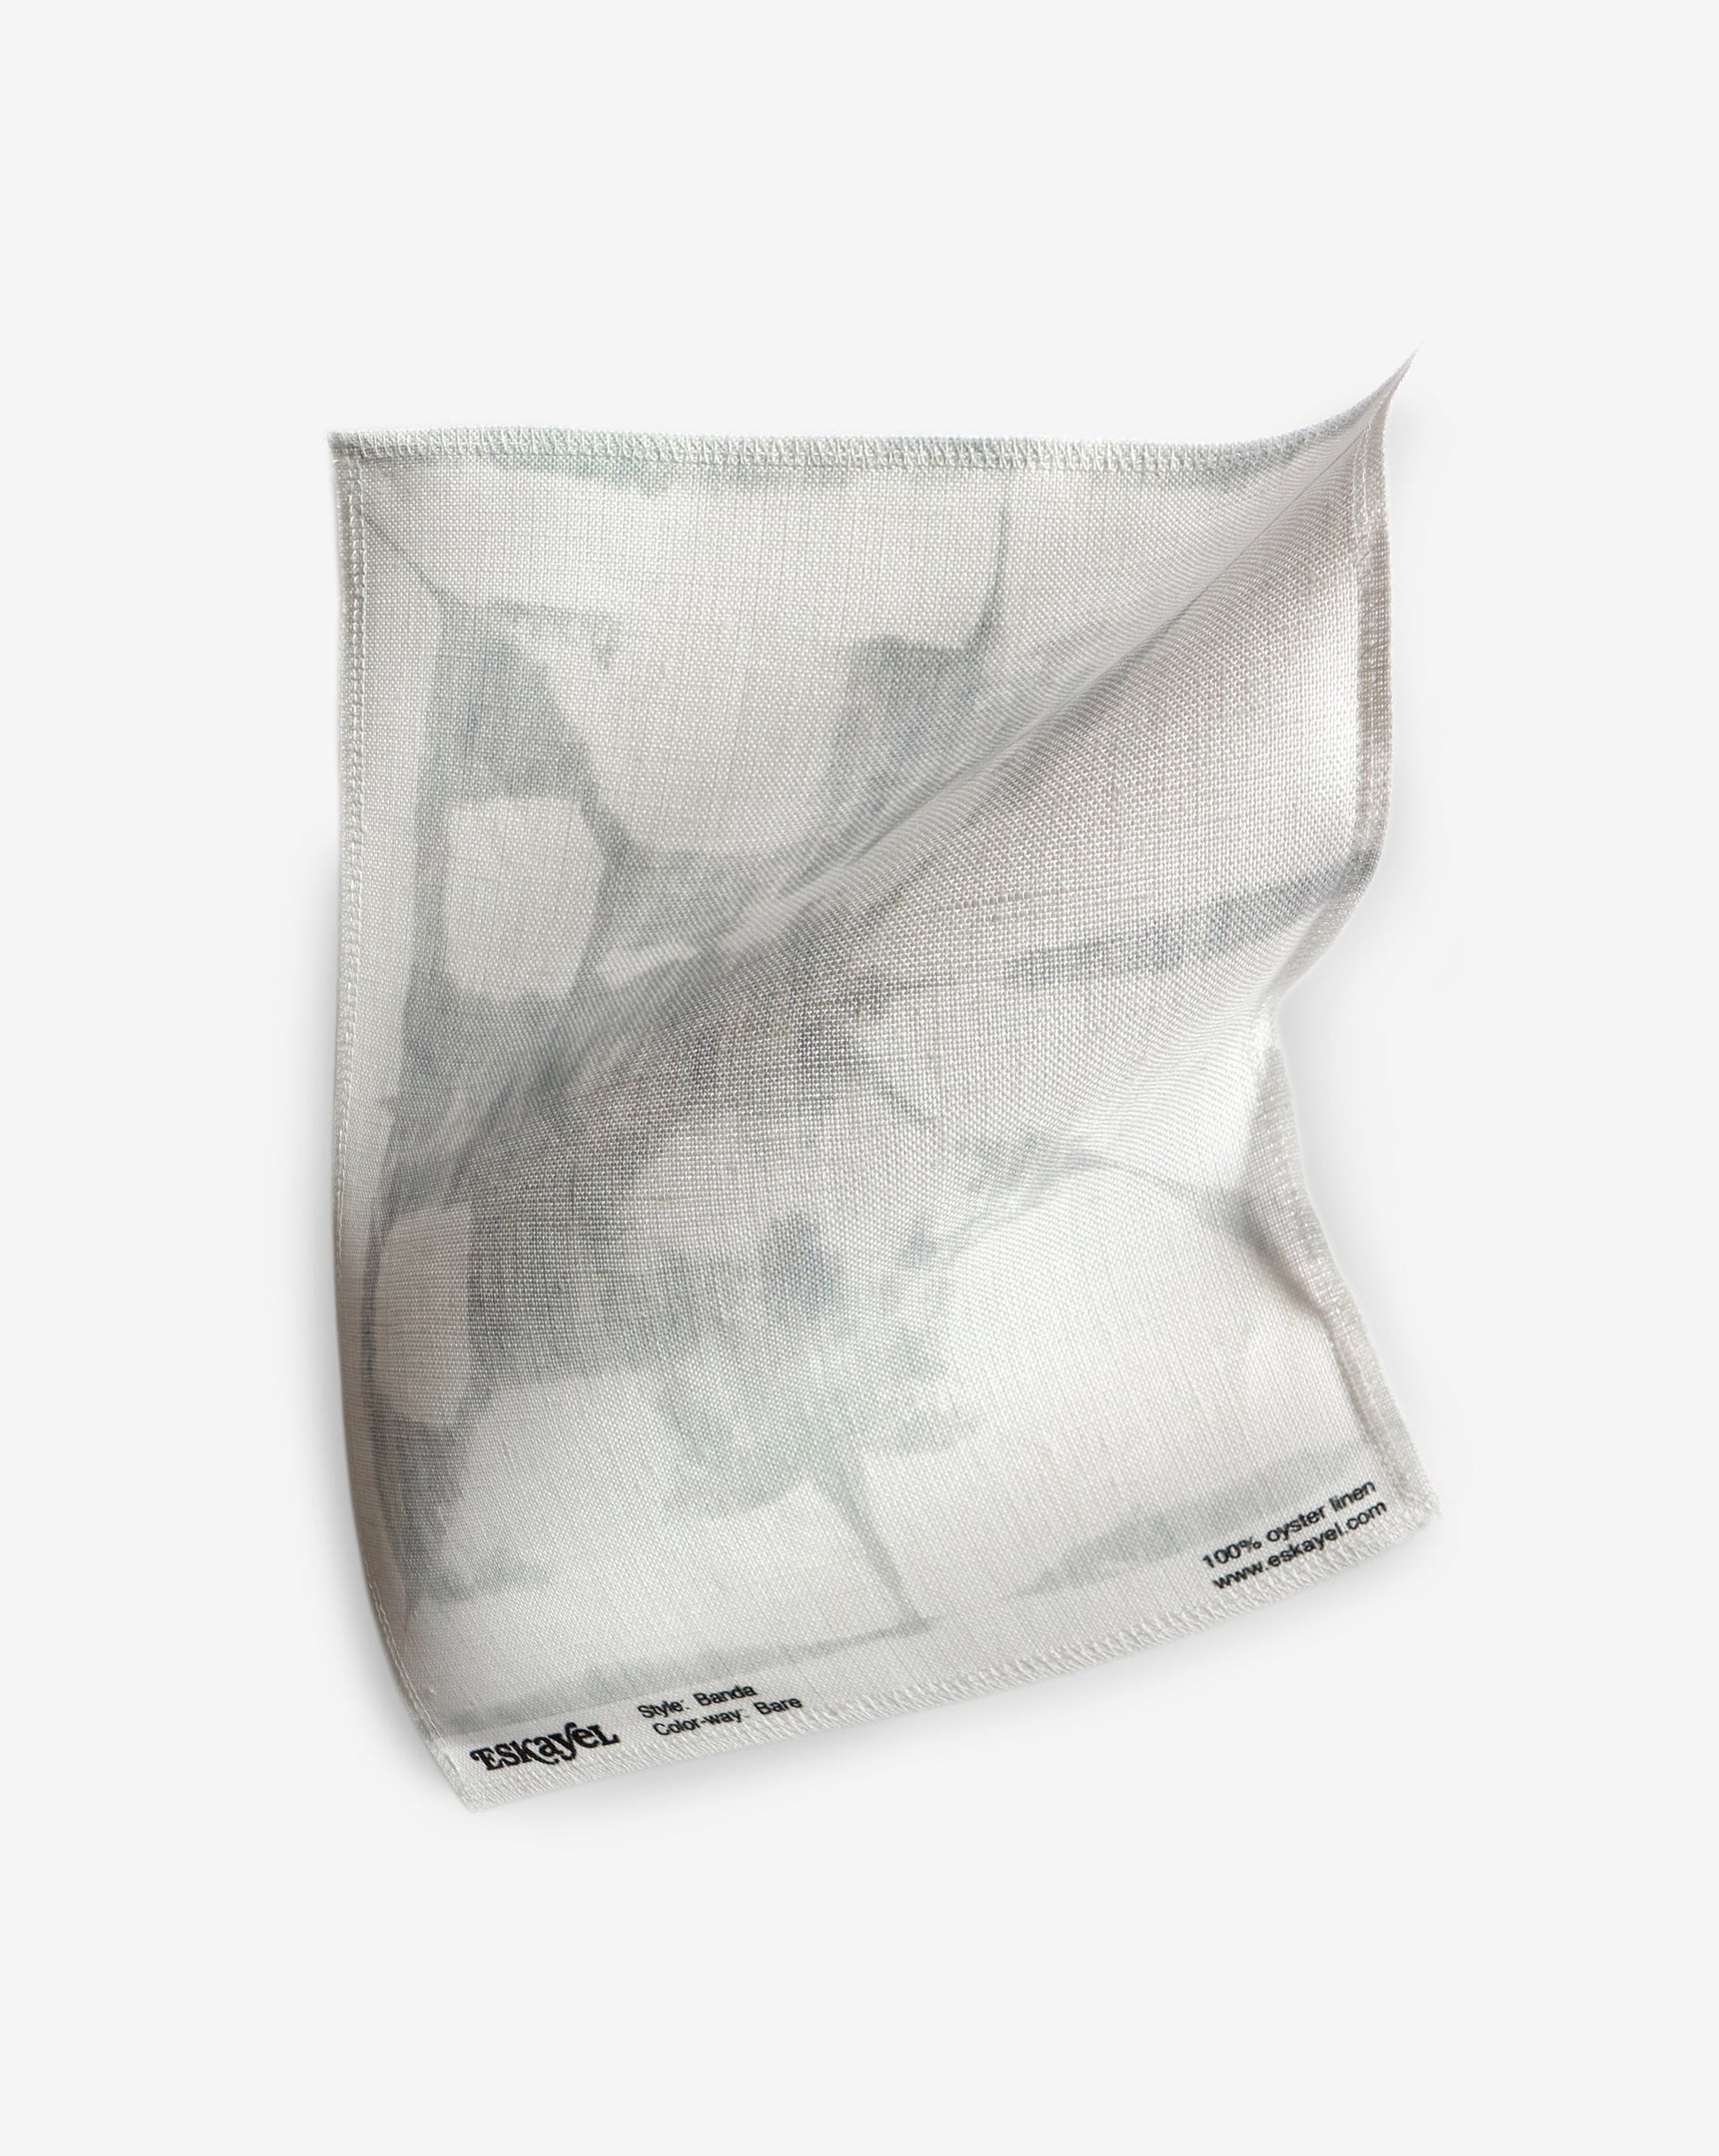 A white and gray shibori tie-dye Banda Fabric Bare on a white surface